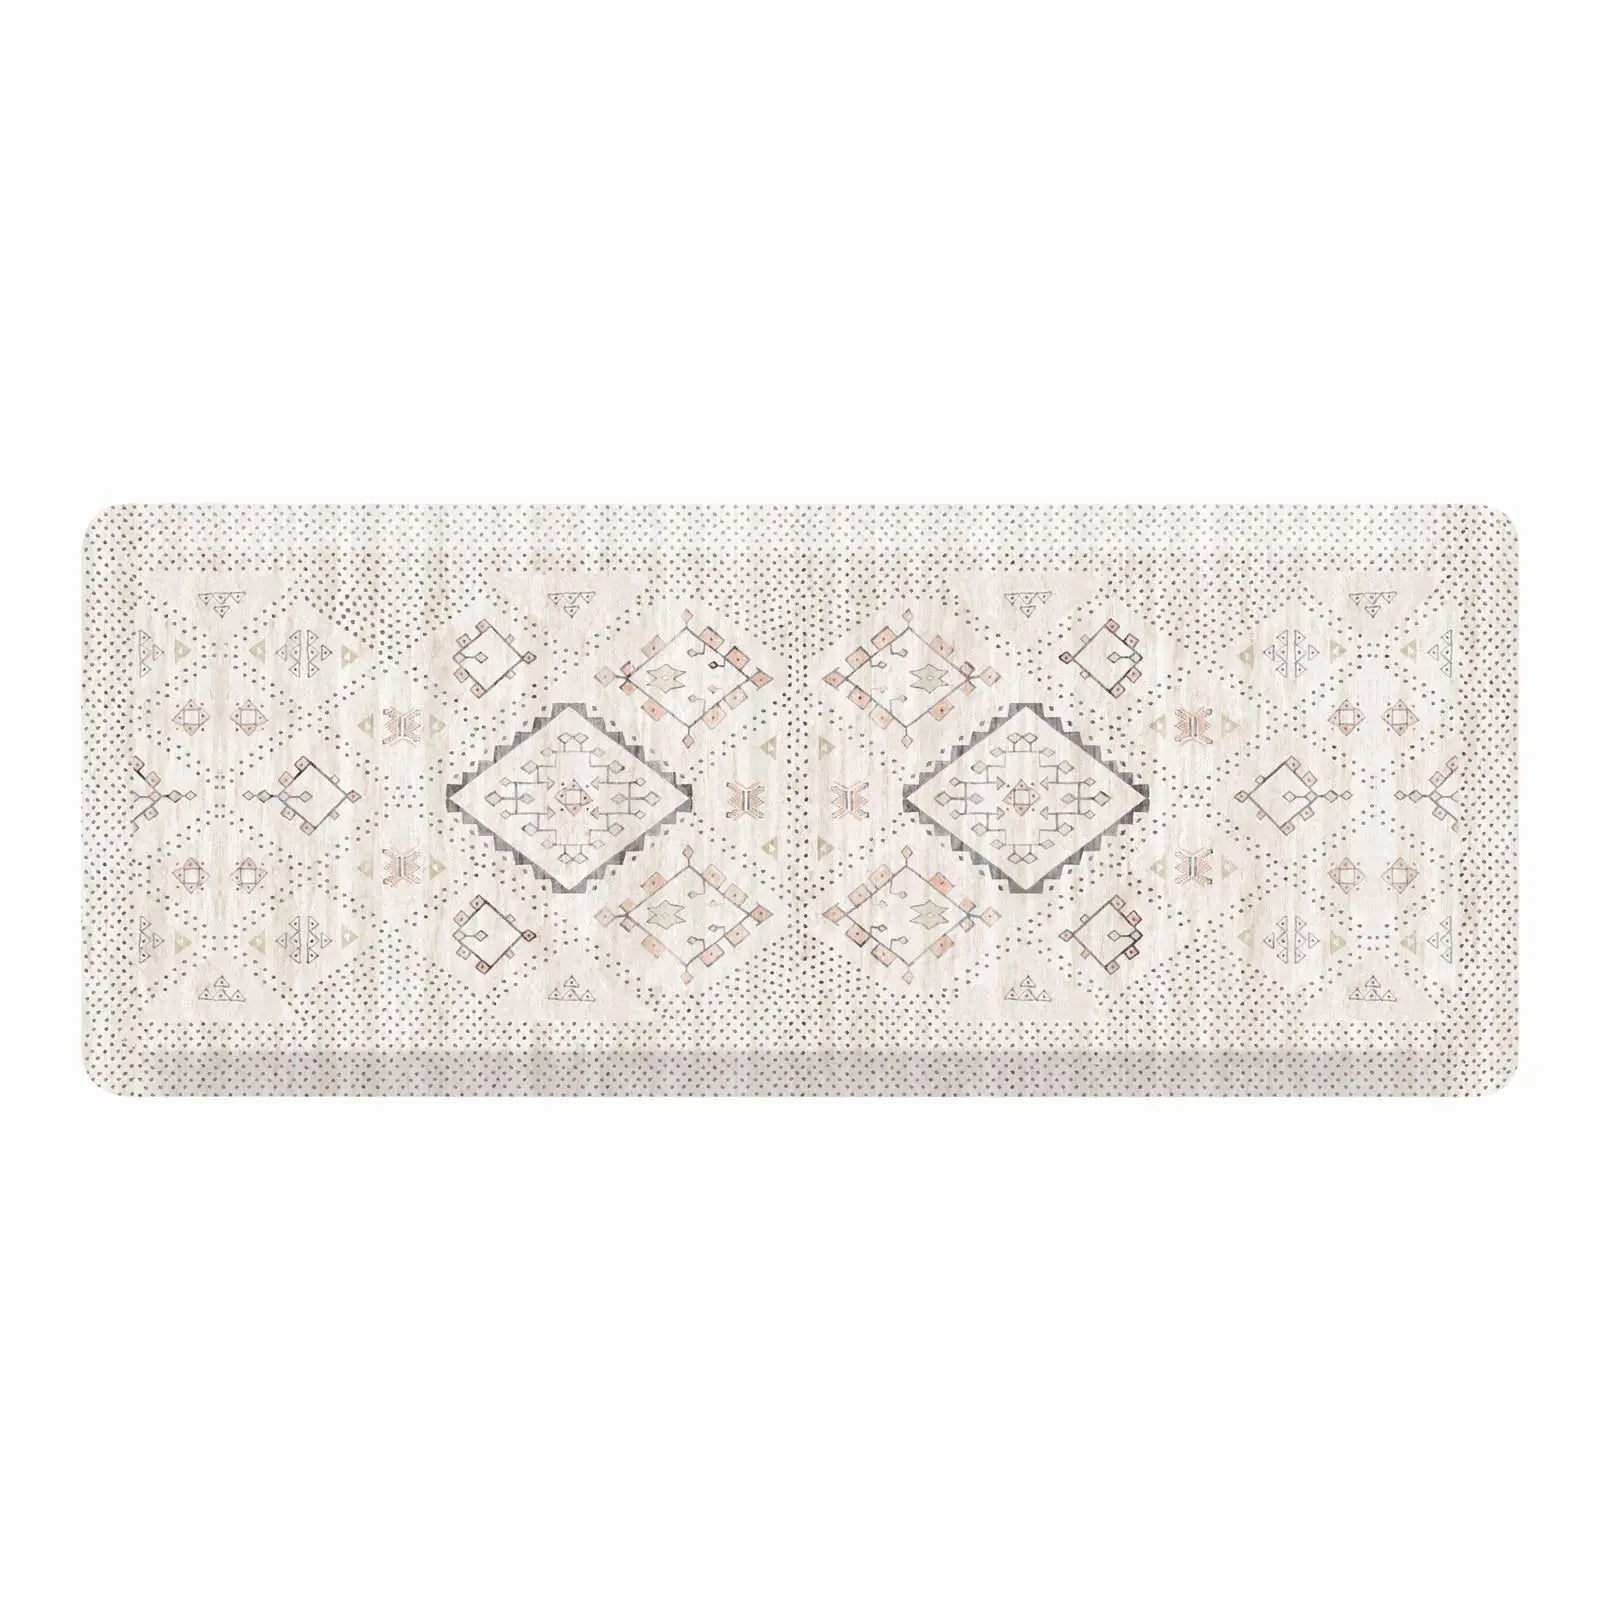 Ula Oat neutral boho kitchen mat in size 22x54